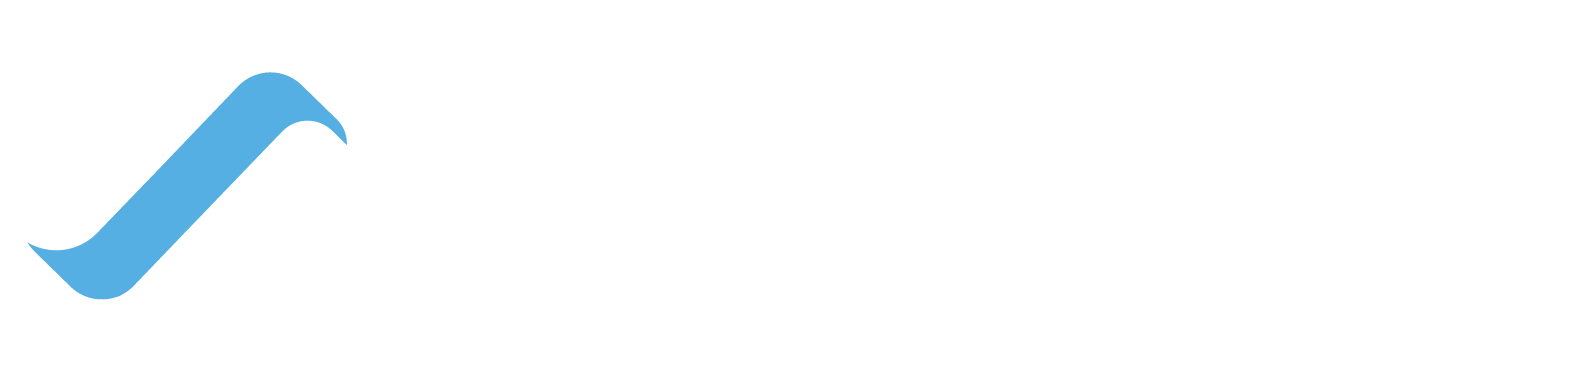 Pharming Group Logo groß für dunkle Hintergründe (transparentes PNG)